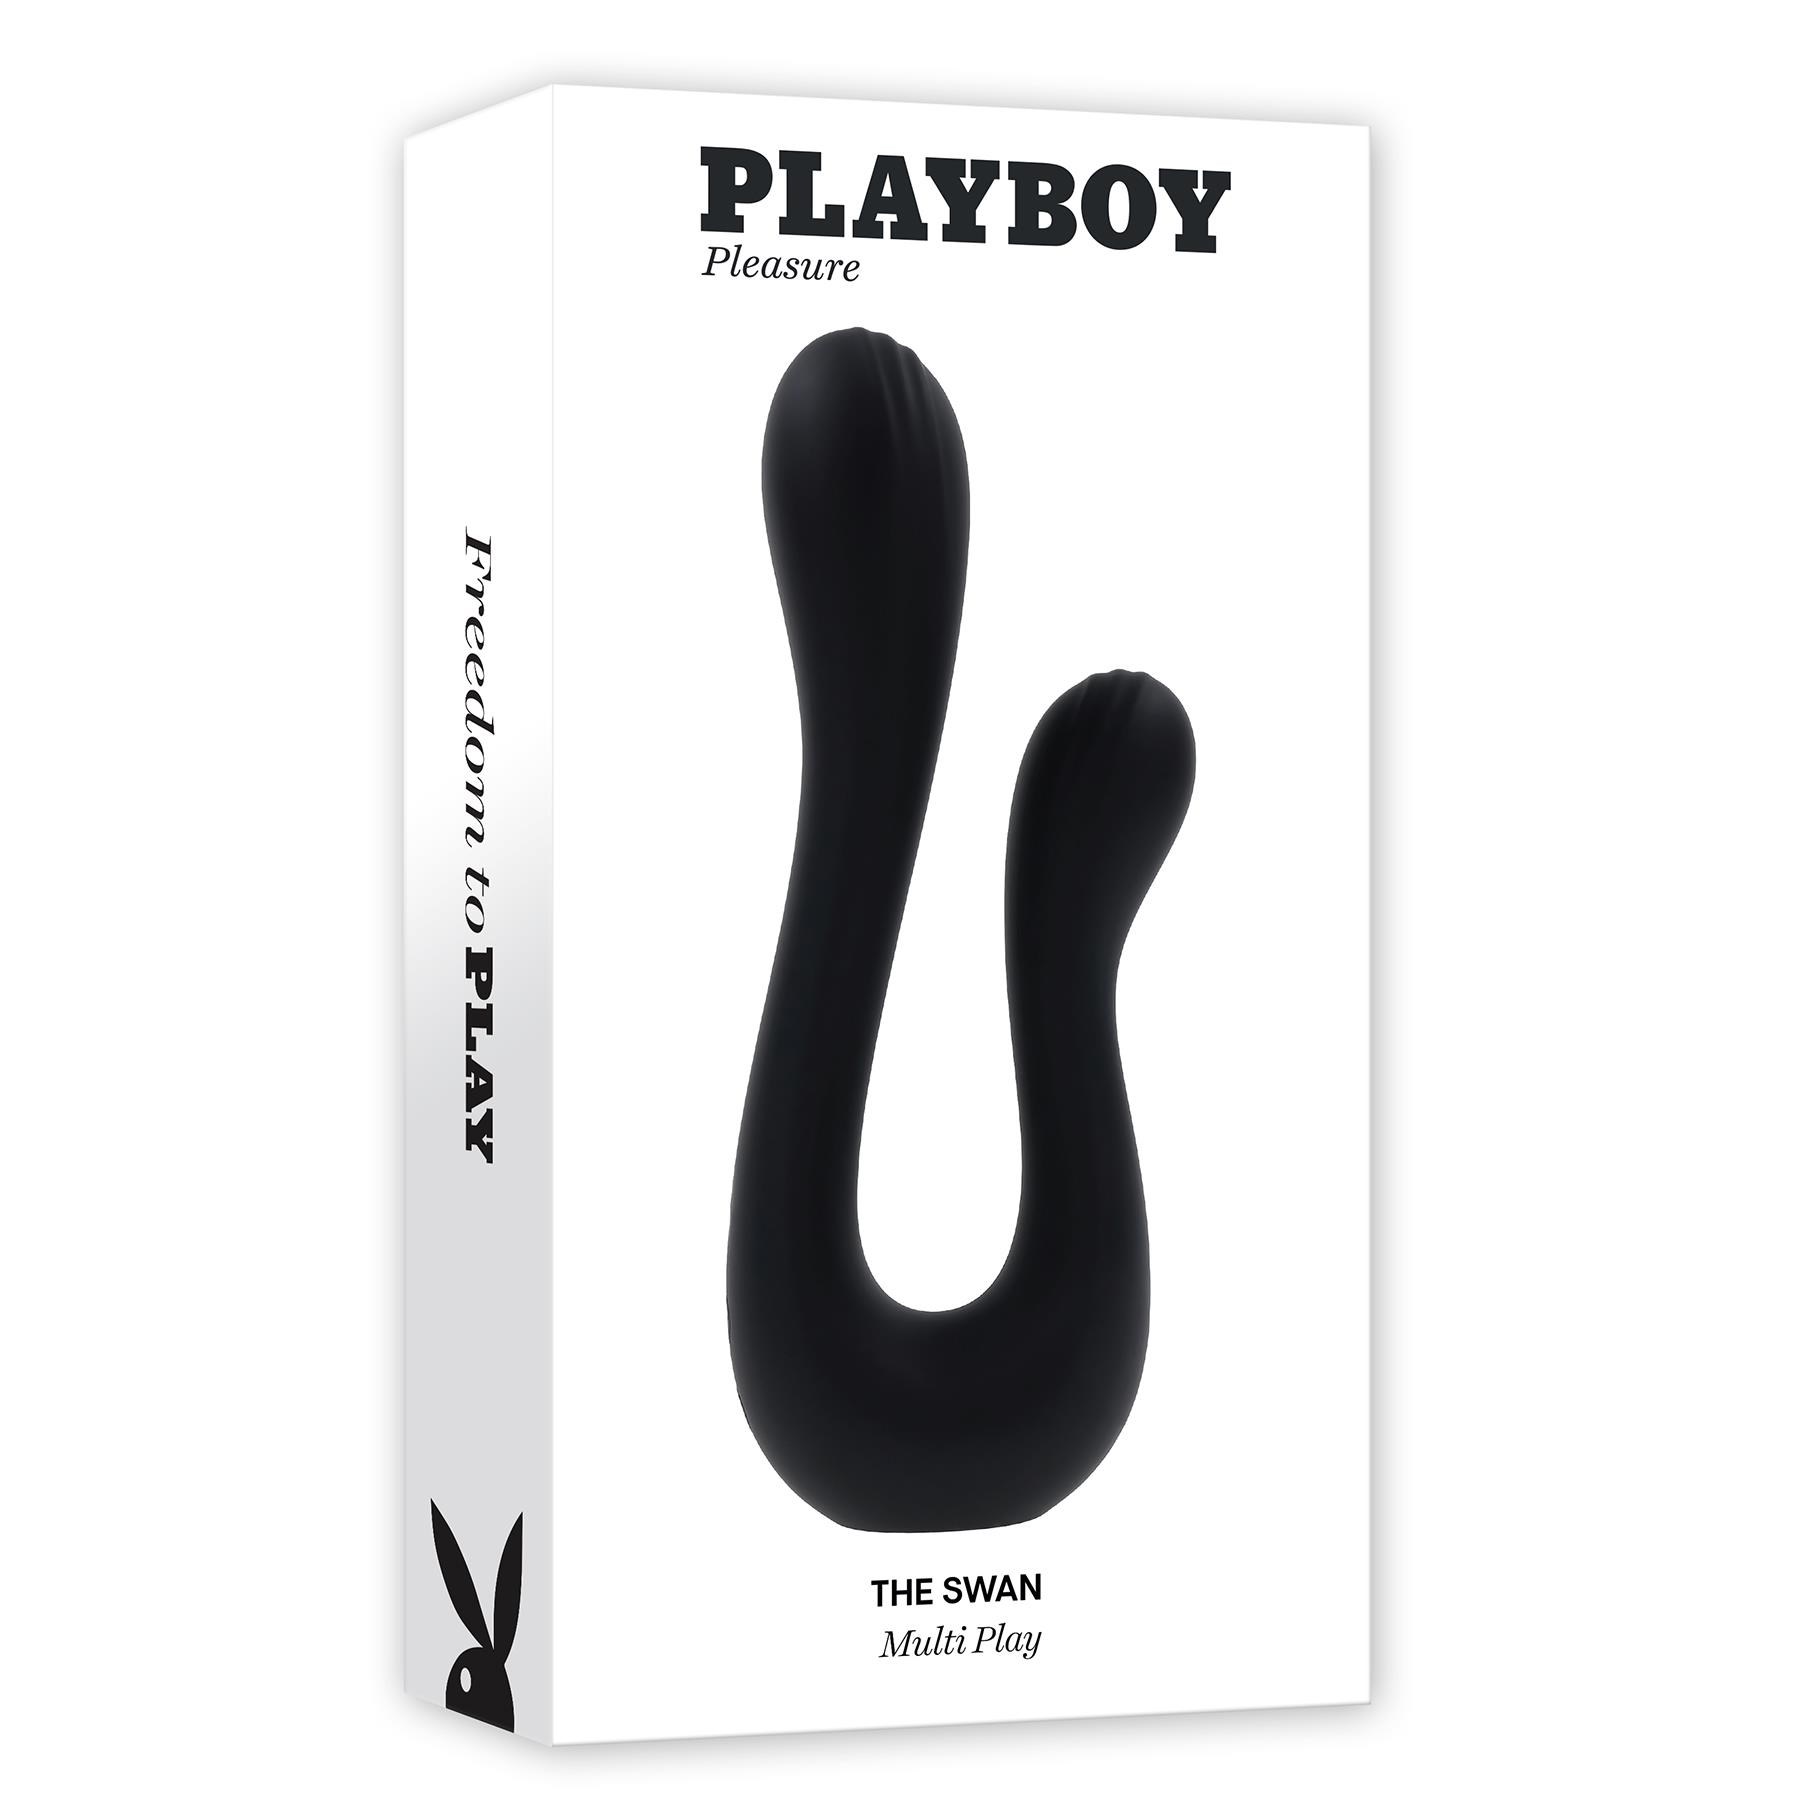 Playboy Pleasure The Swan Multi-Play Vibrator - Packaging Shot